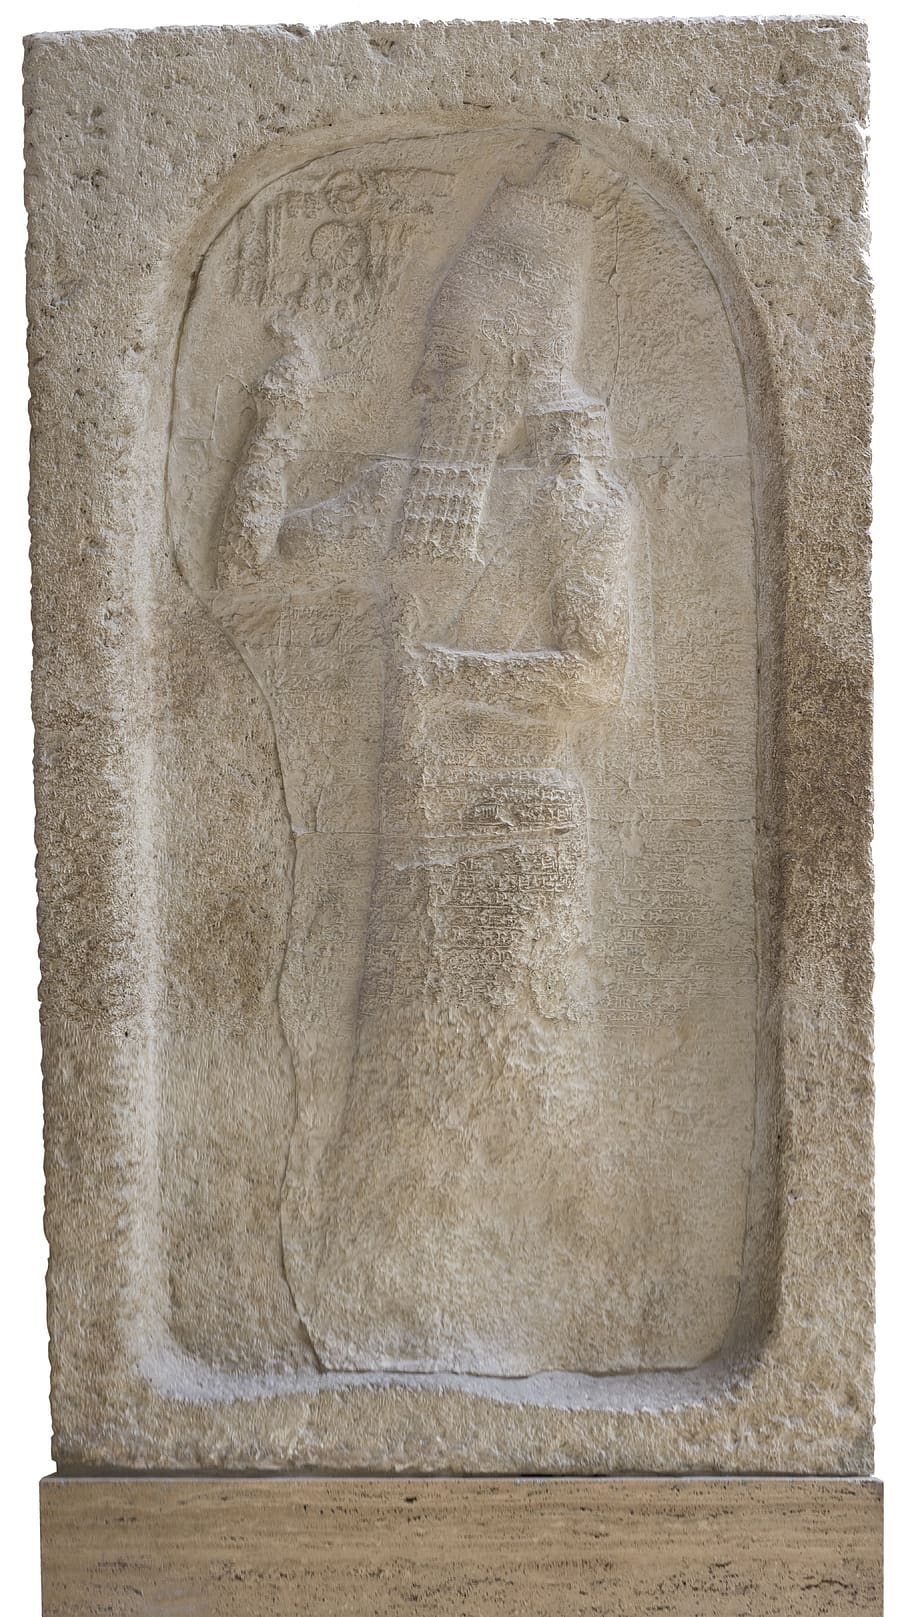 assarhadon, babylon, stele, relief, mesopotamia, ancient times, archaeology, pergamonmuseum, berlin, antiquity